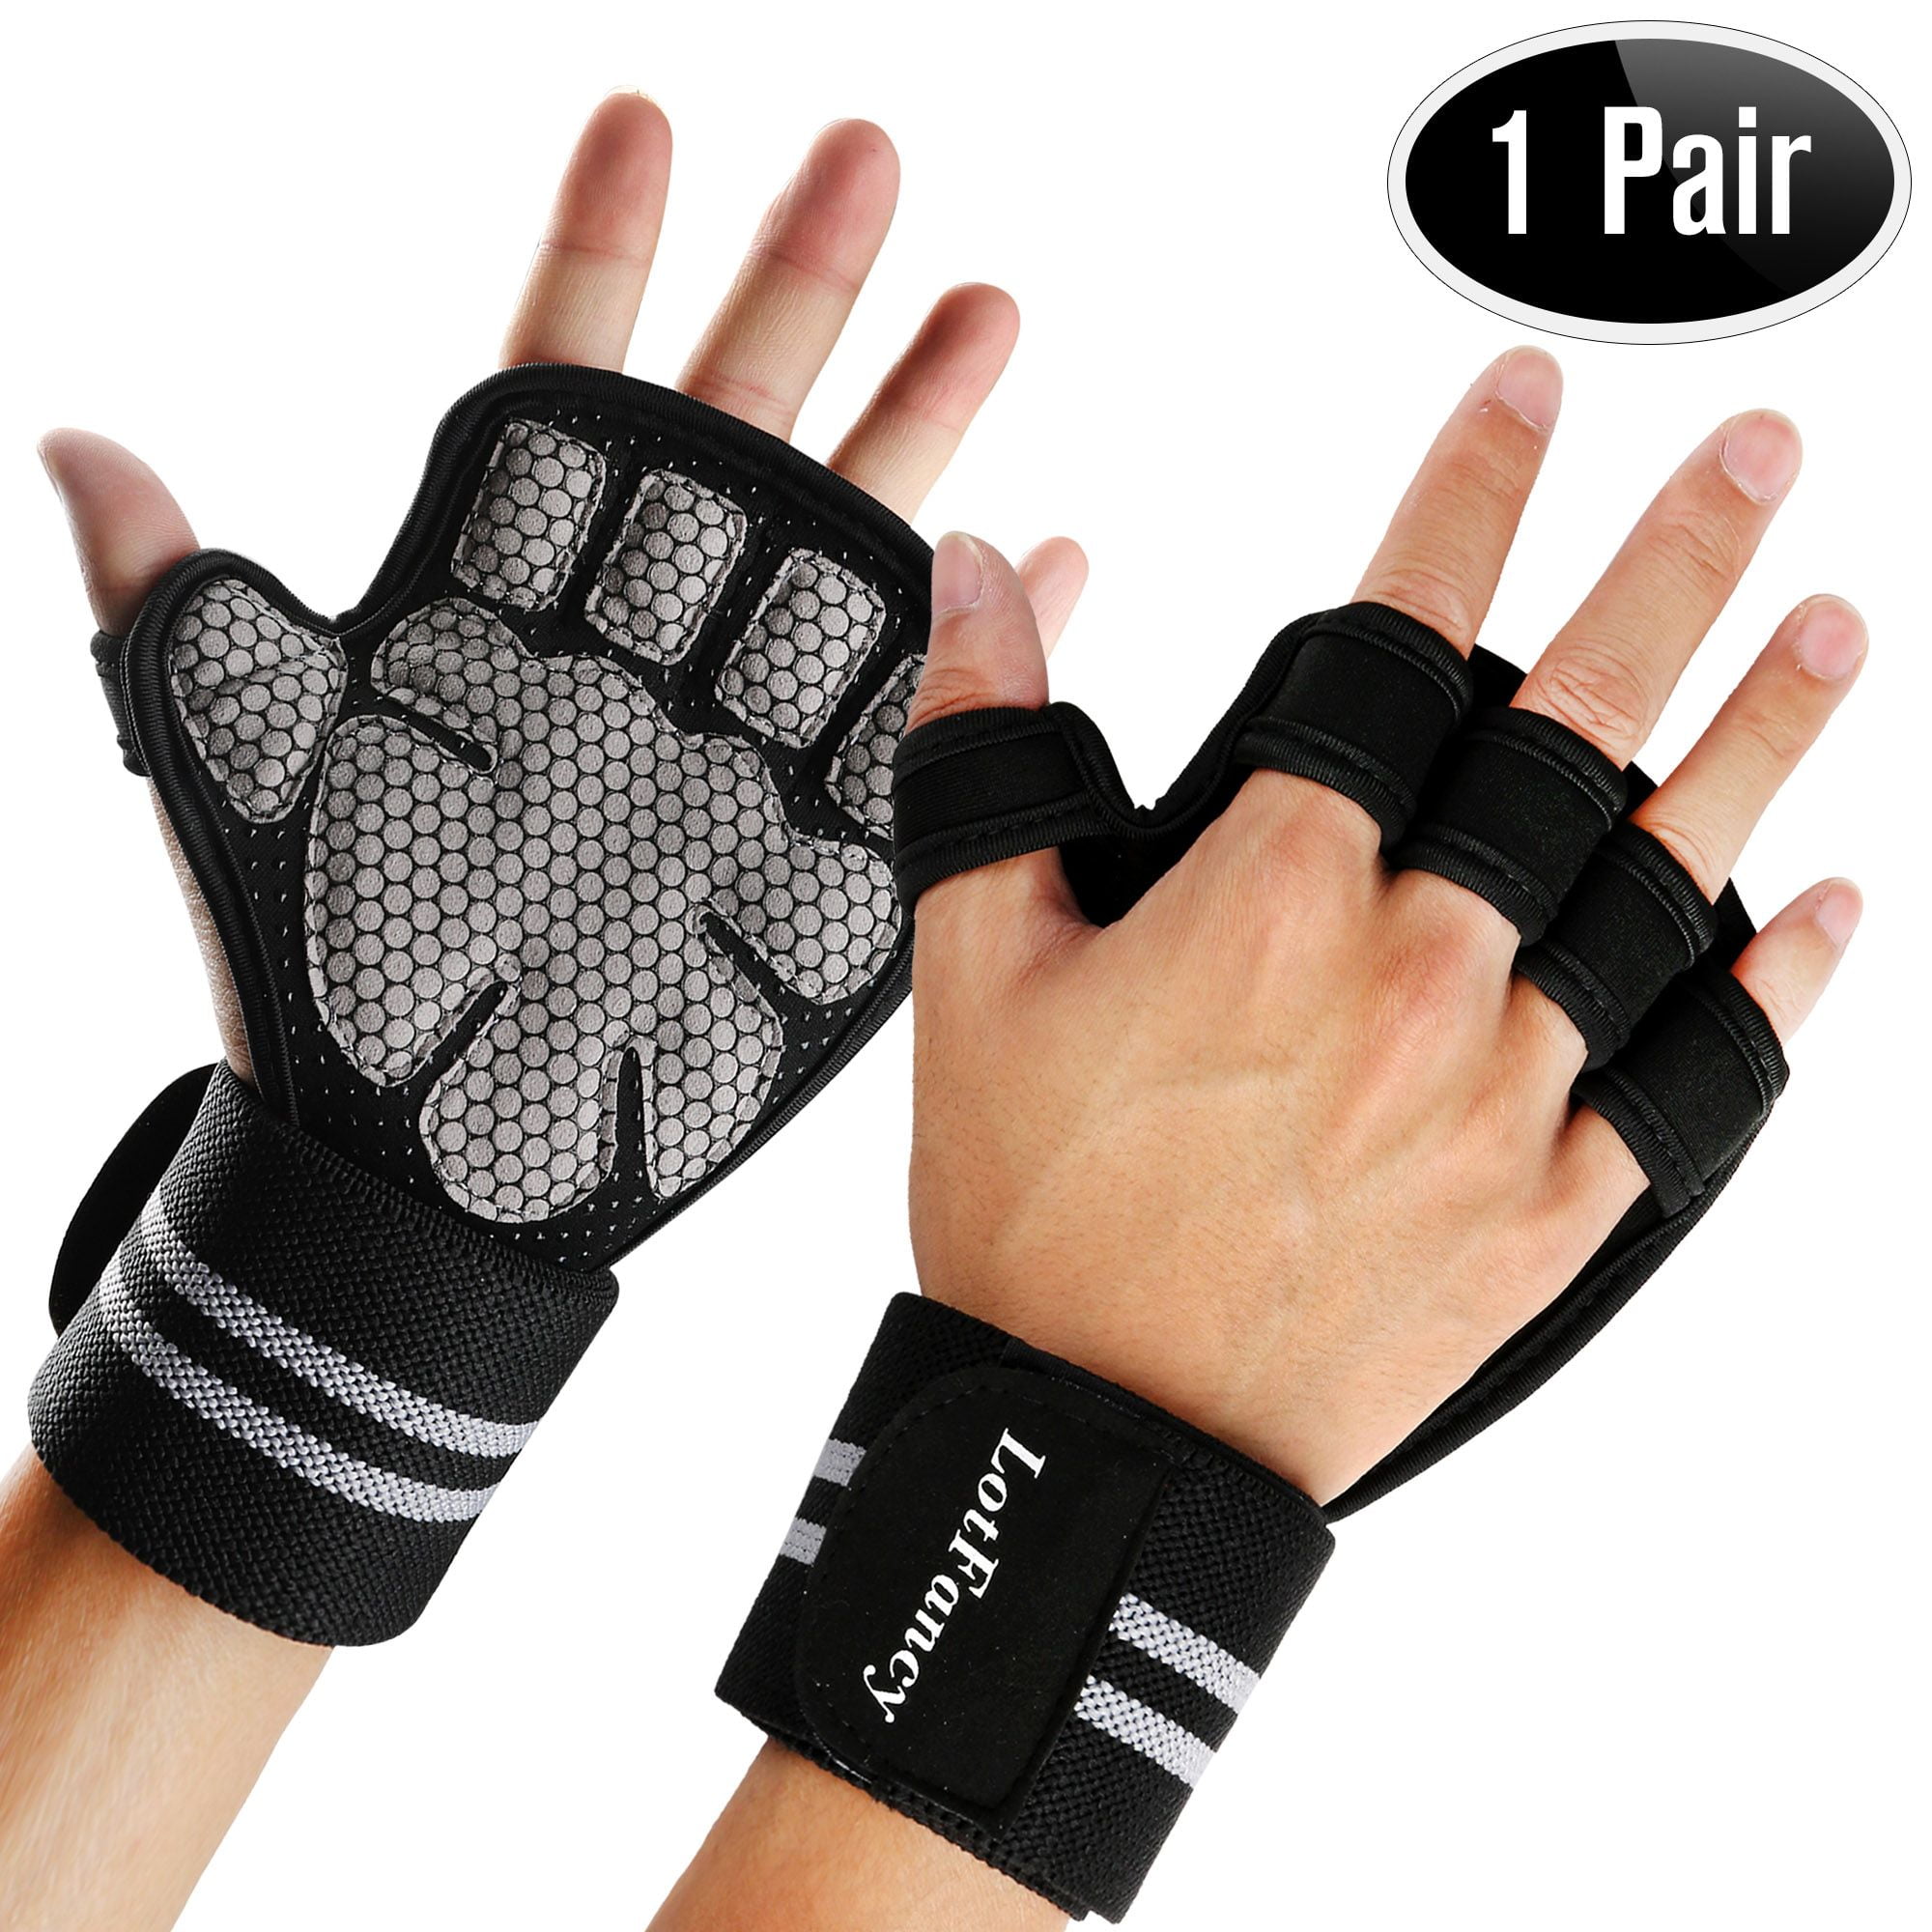 Weight lifting Gym Straps Hand Glove Wrist Palm Support Lift Training Workout UK